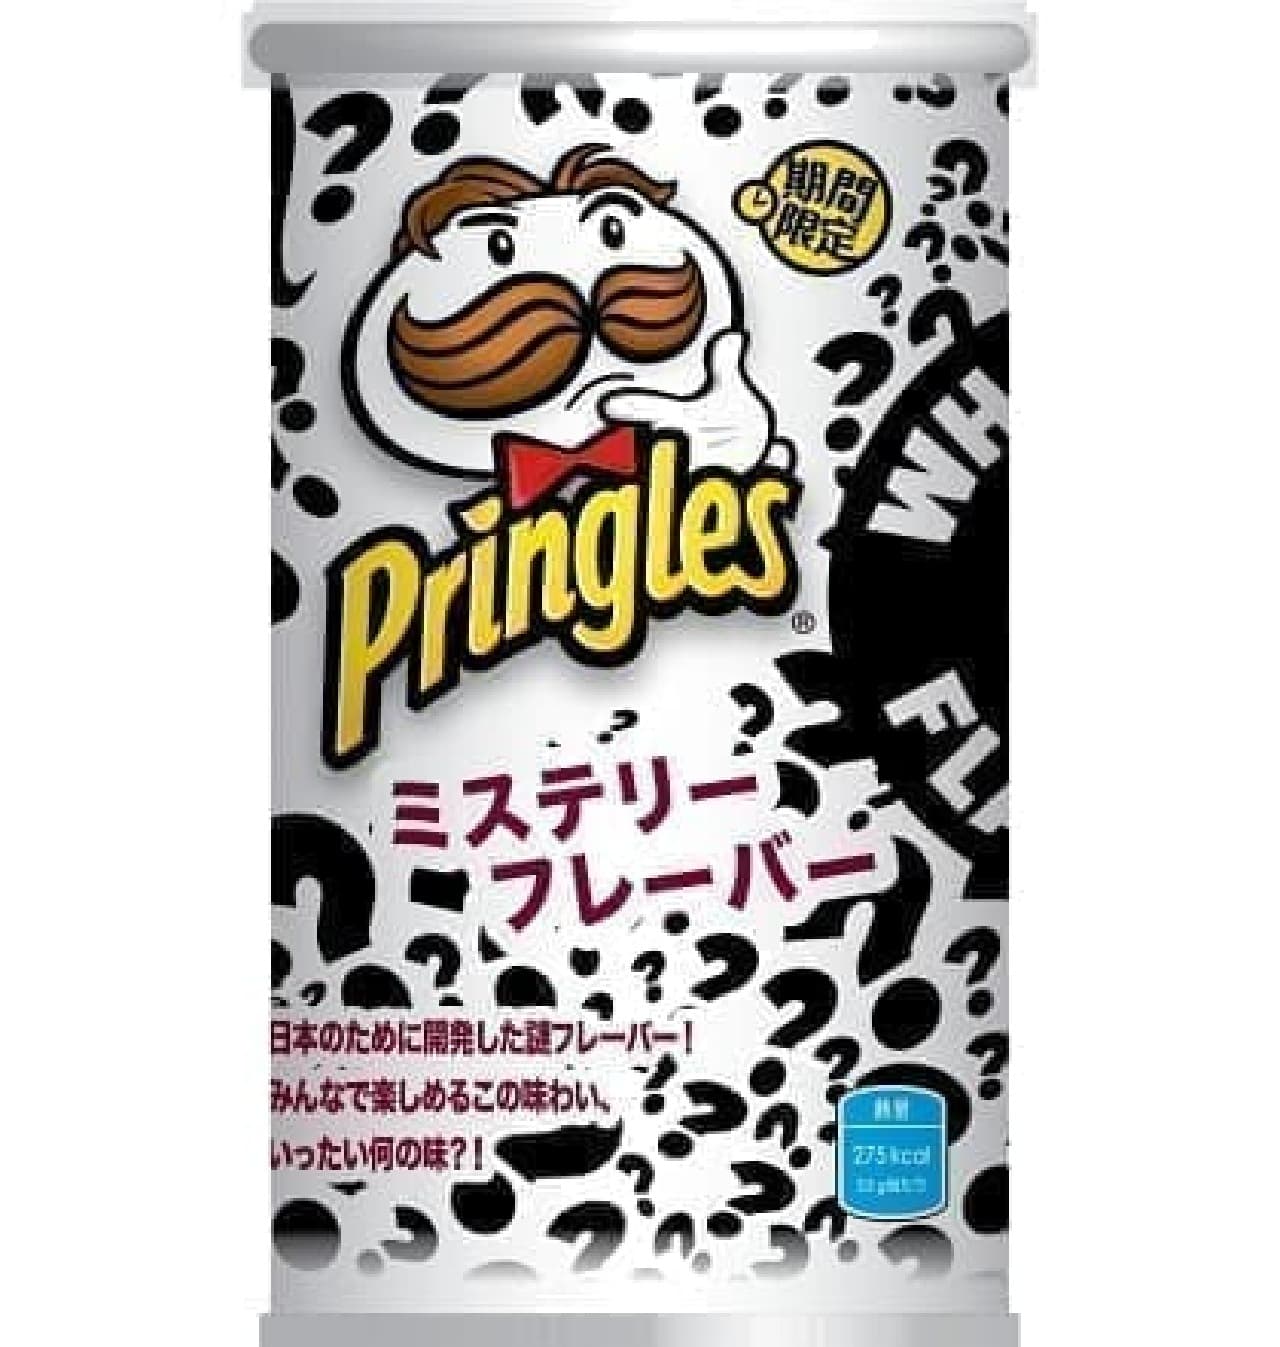 Pringles "Mystery Flavor"